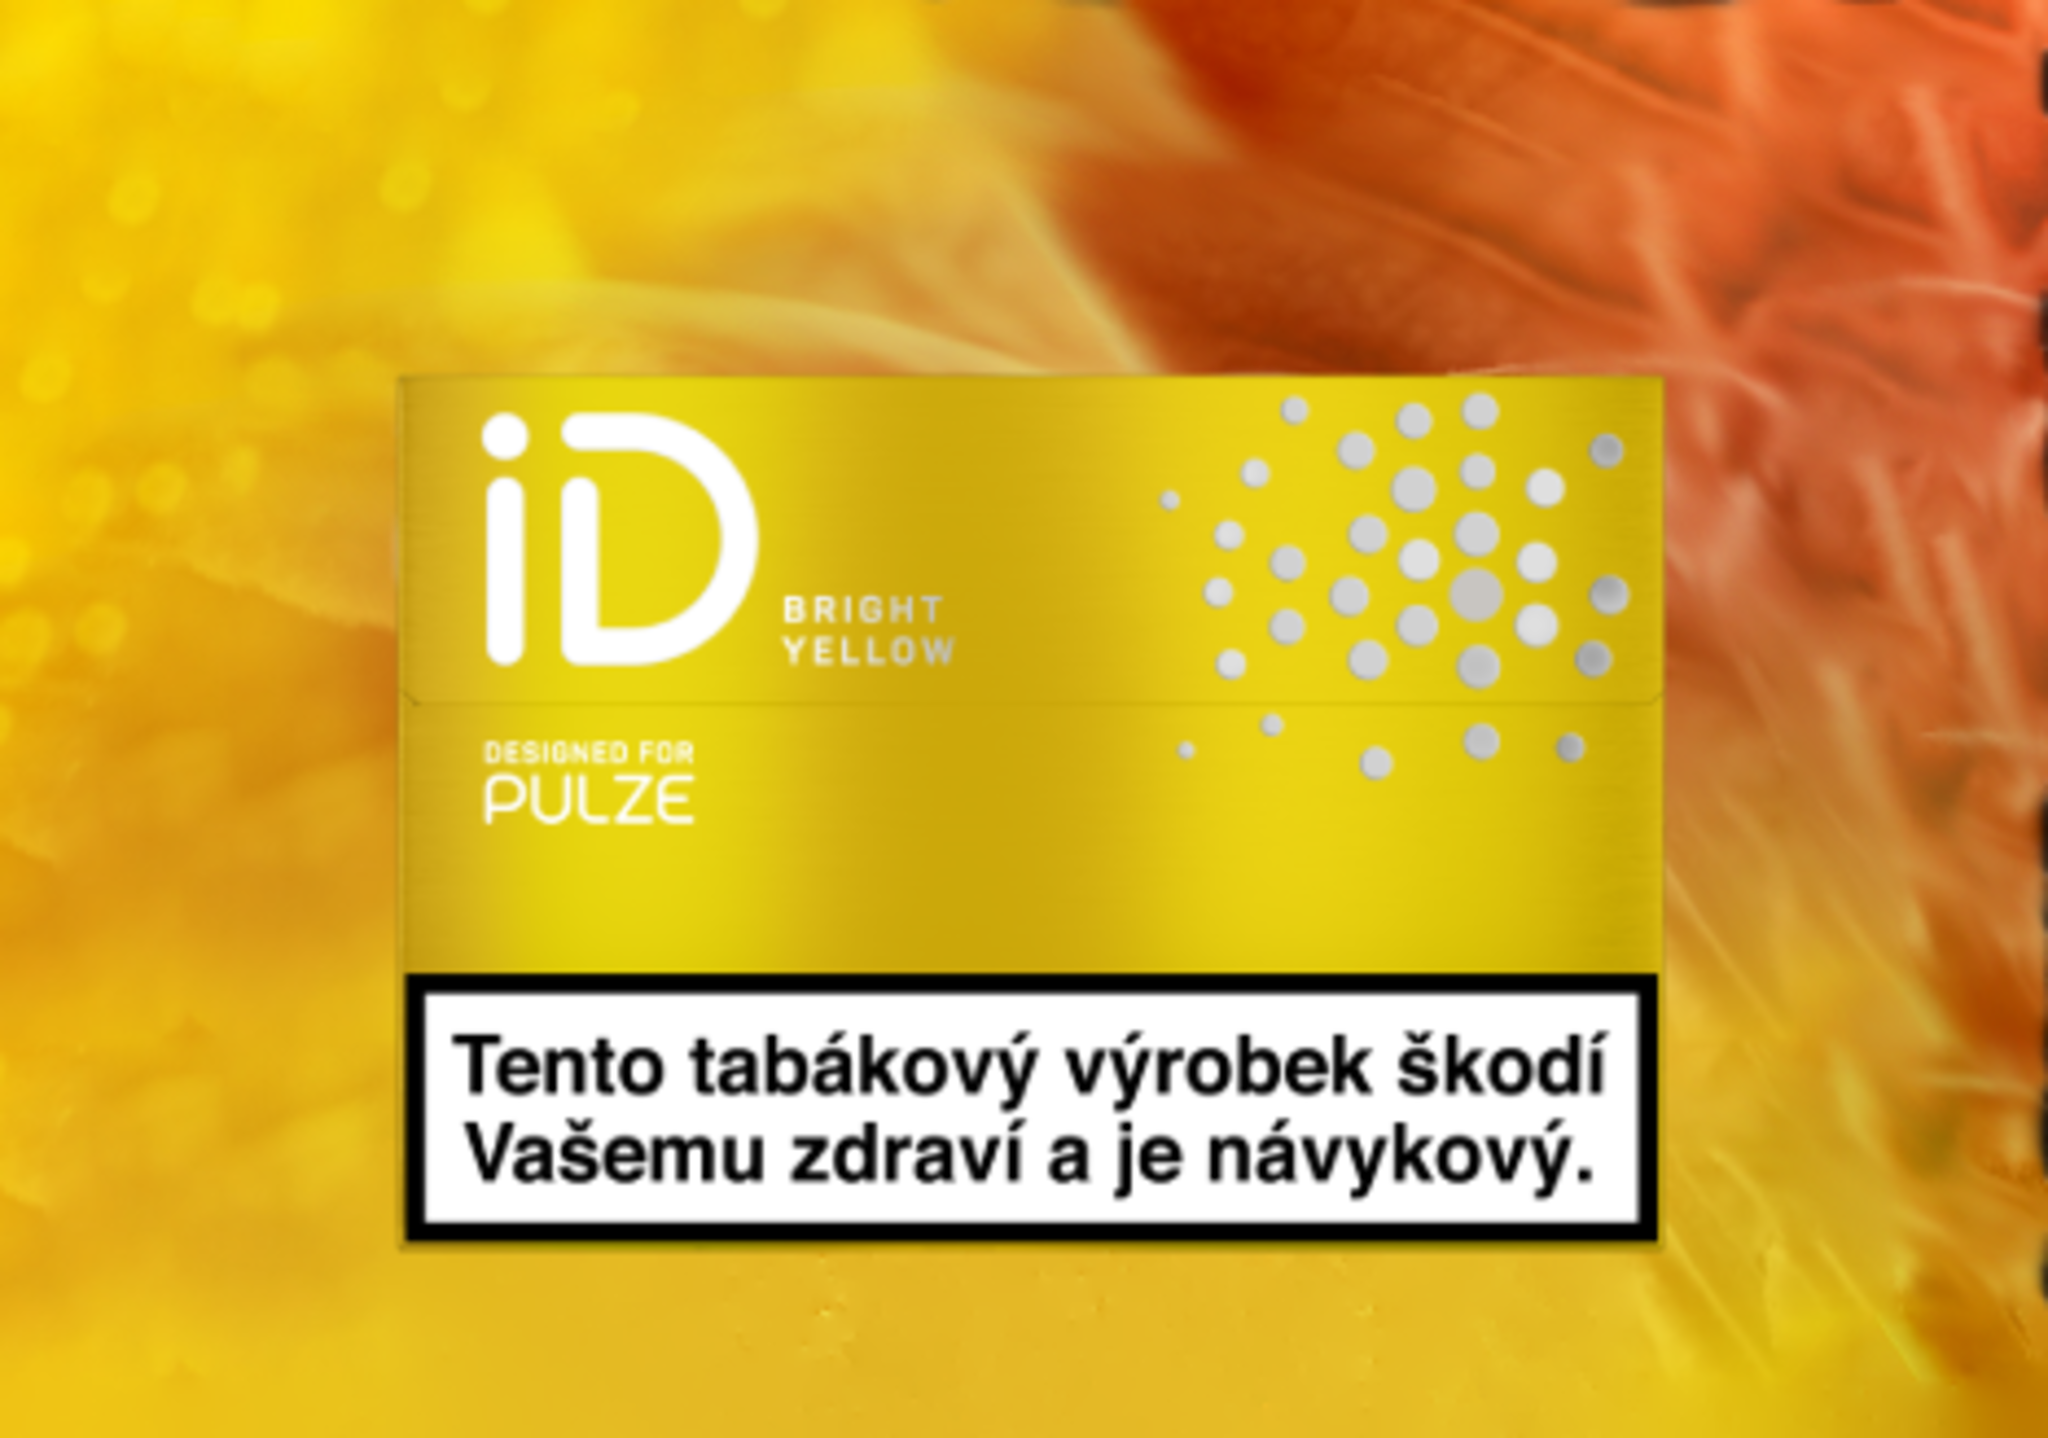 iD Bright Yellow - Mood desktop